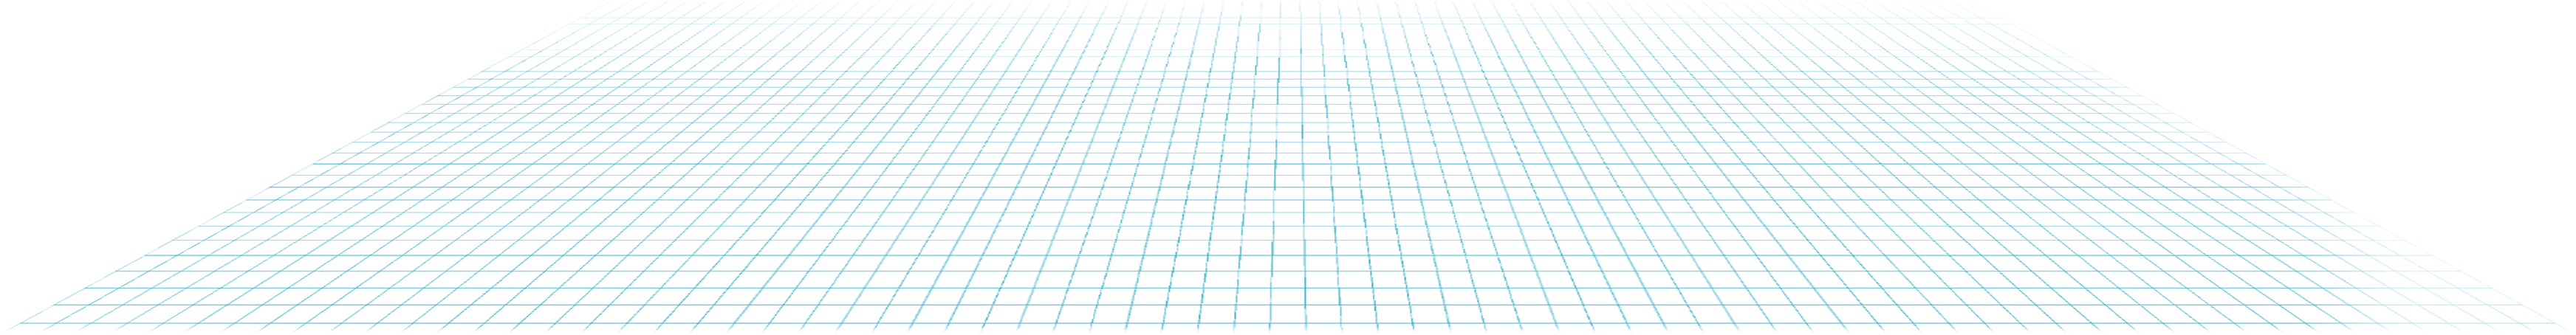 blue grid